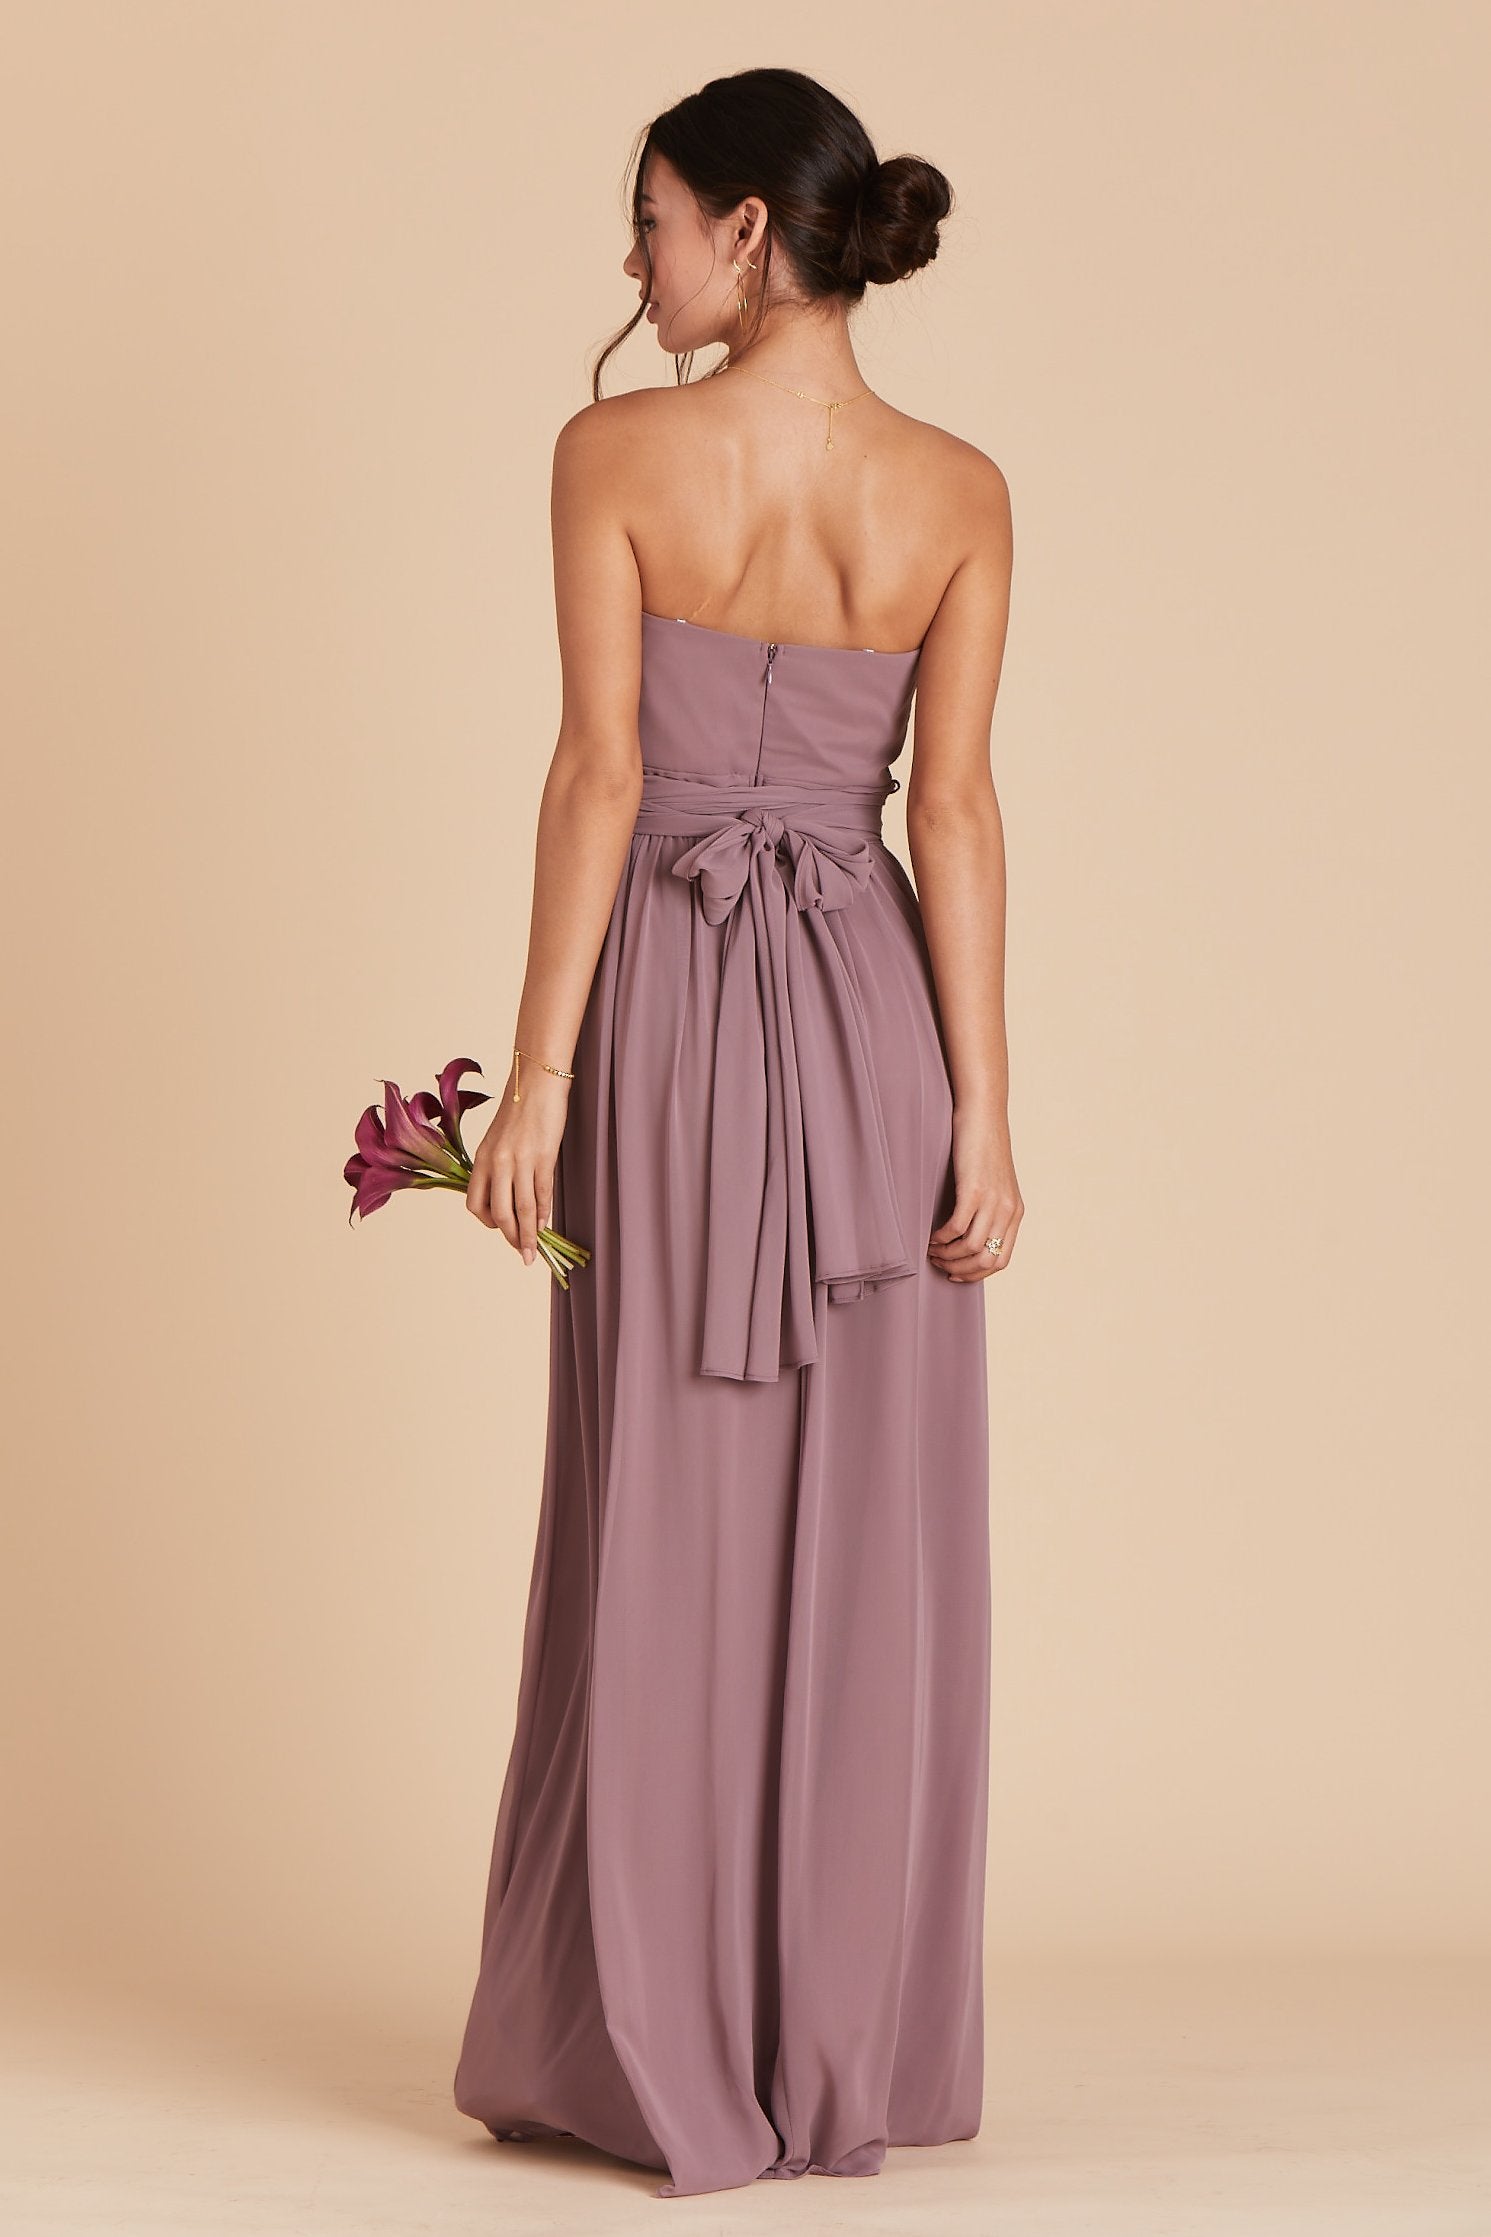 Grace convertible bridesmaid dress in Dark Mauve Purple Chiffon by Birdy Grey, back view